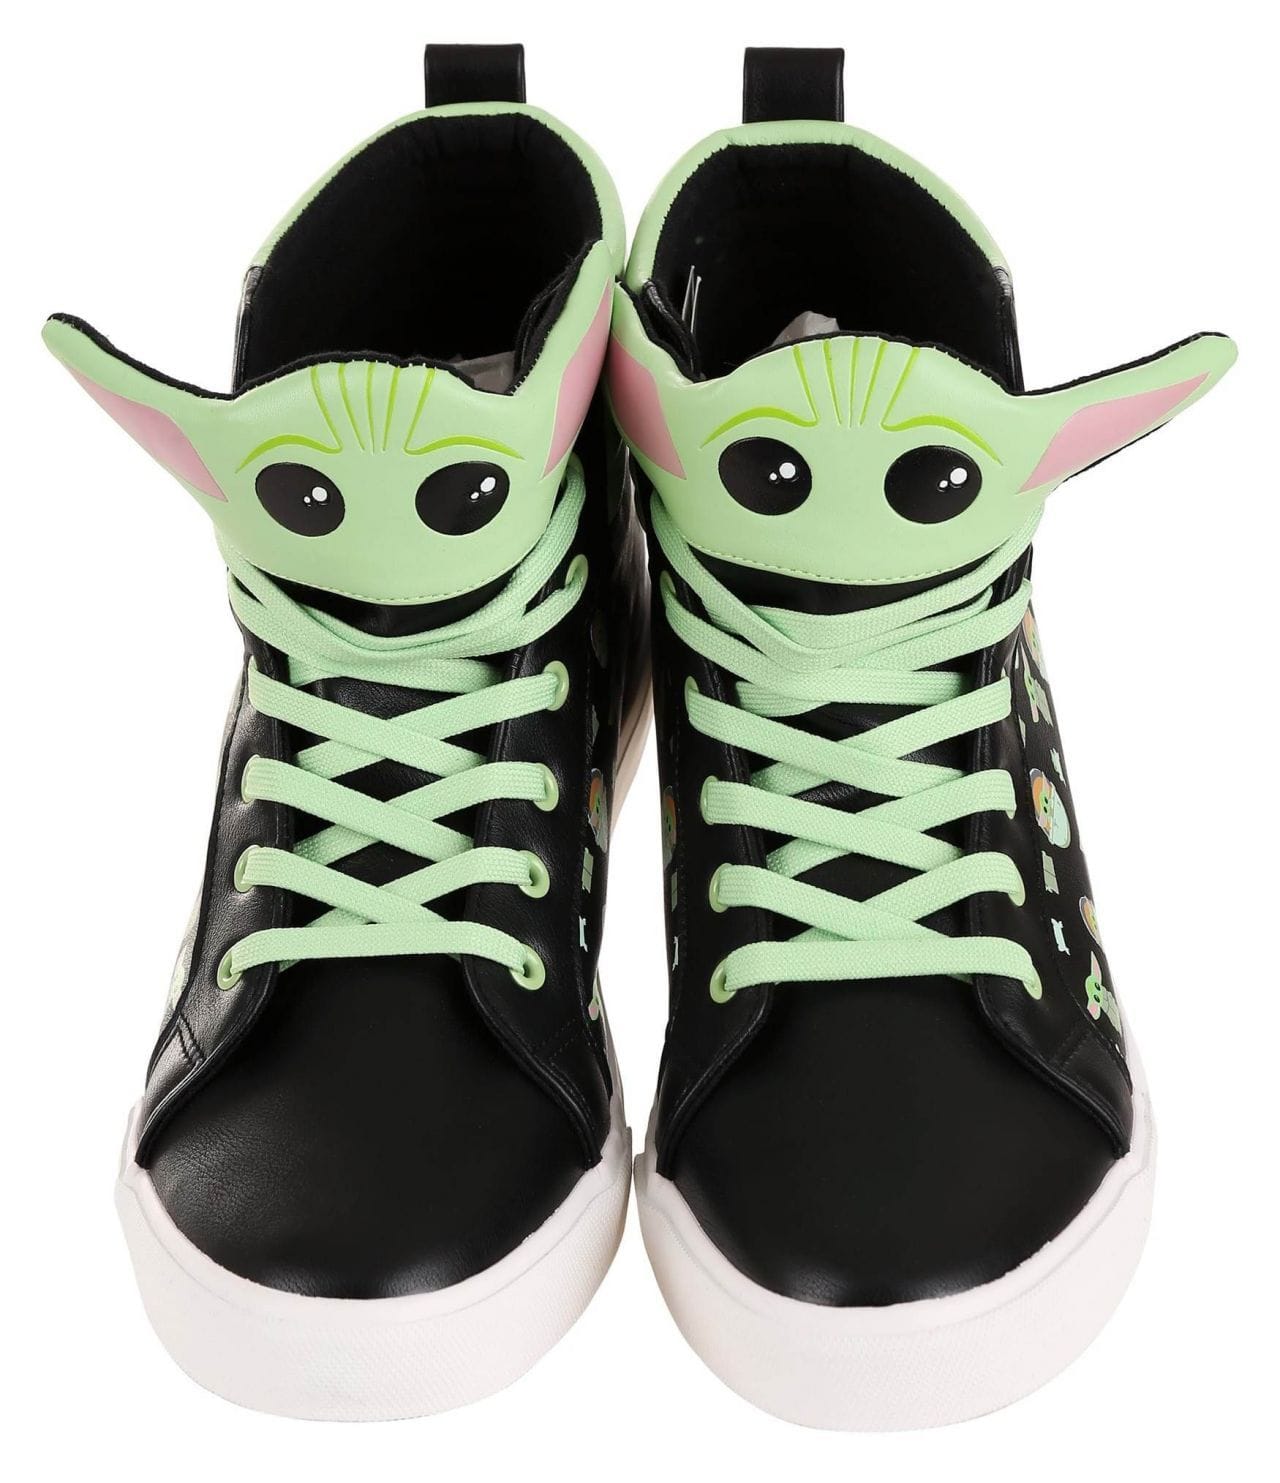 Star Wars : allez vous craquer pour les sneakers Baby Yoda ? #7